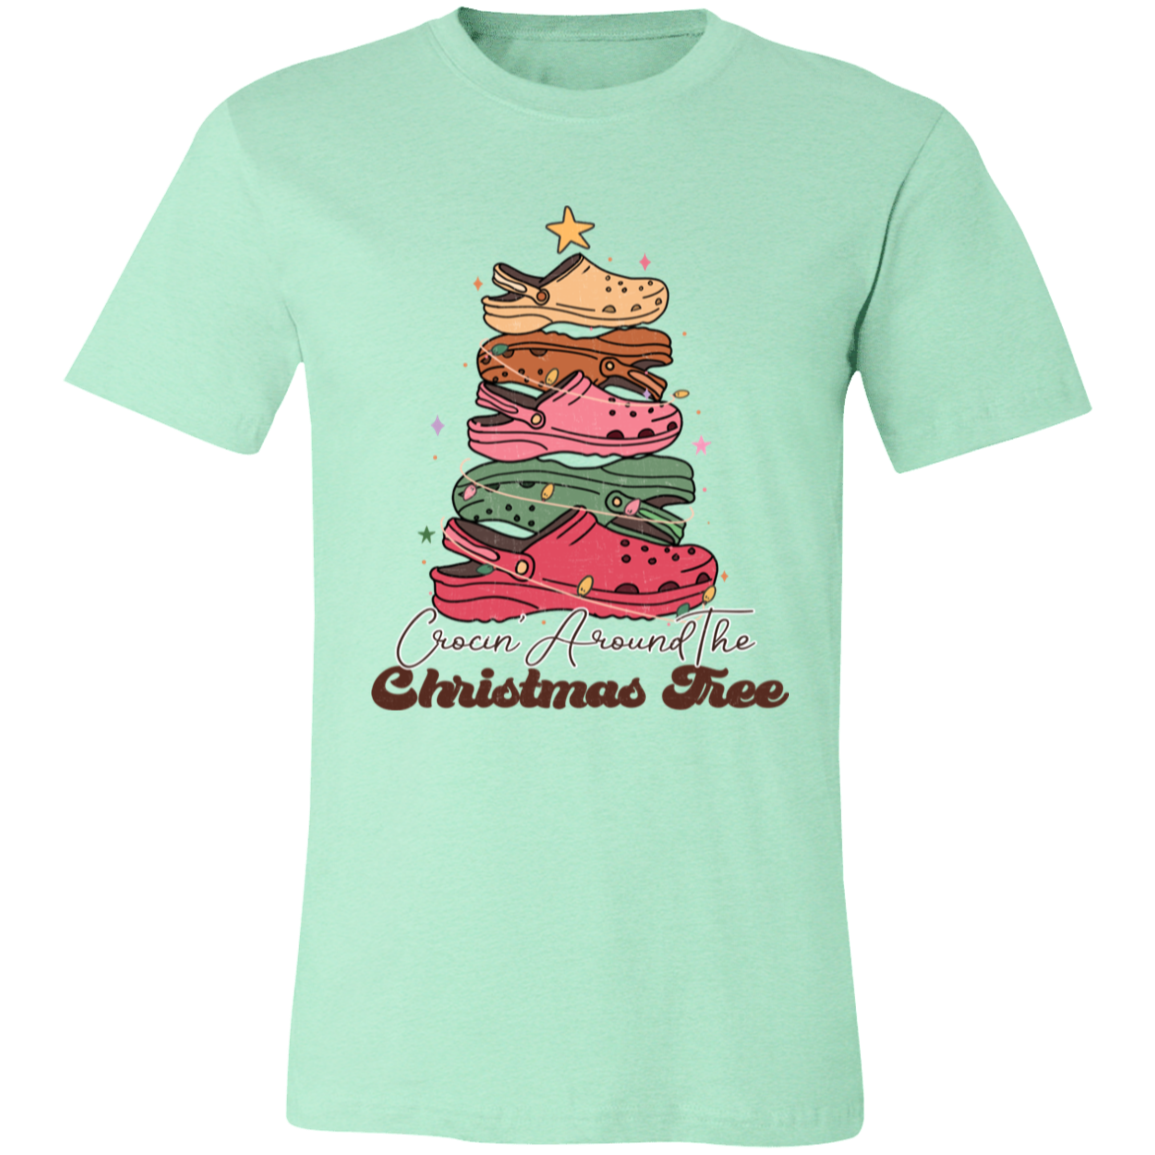 Croc'n Around The Christmas Tree Shirt